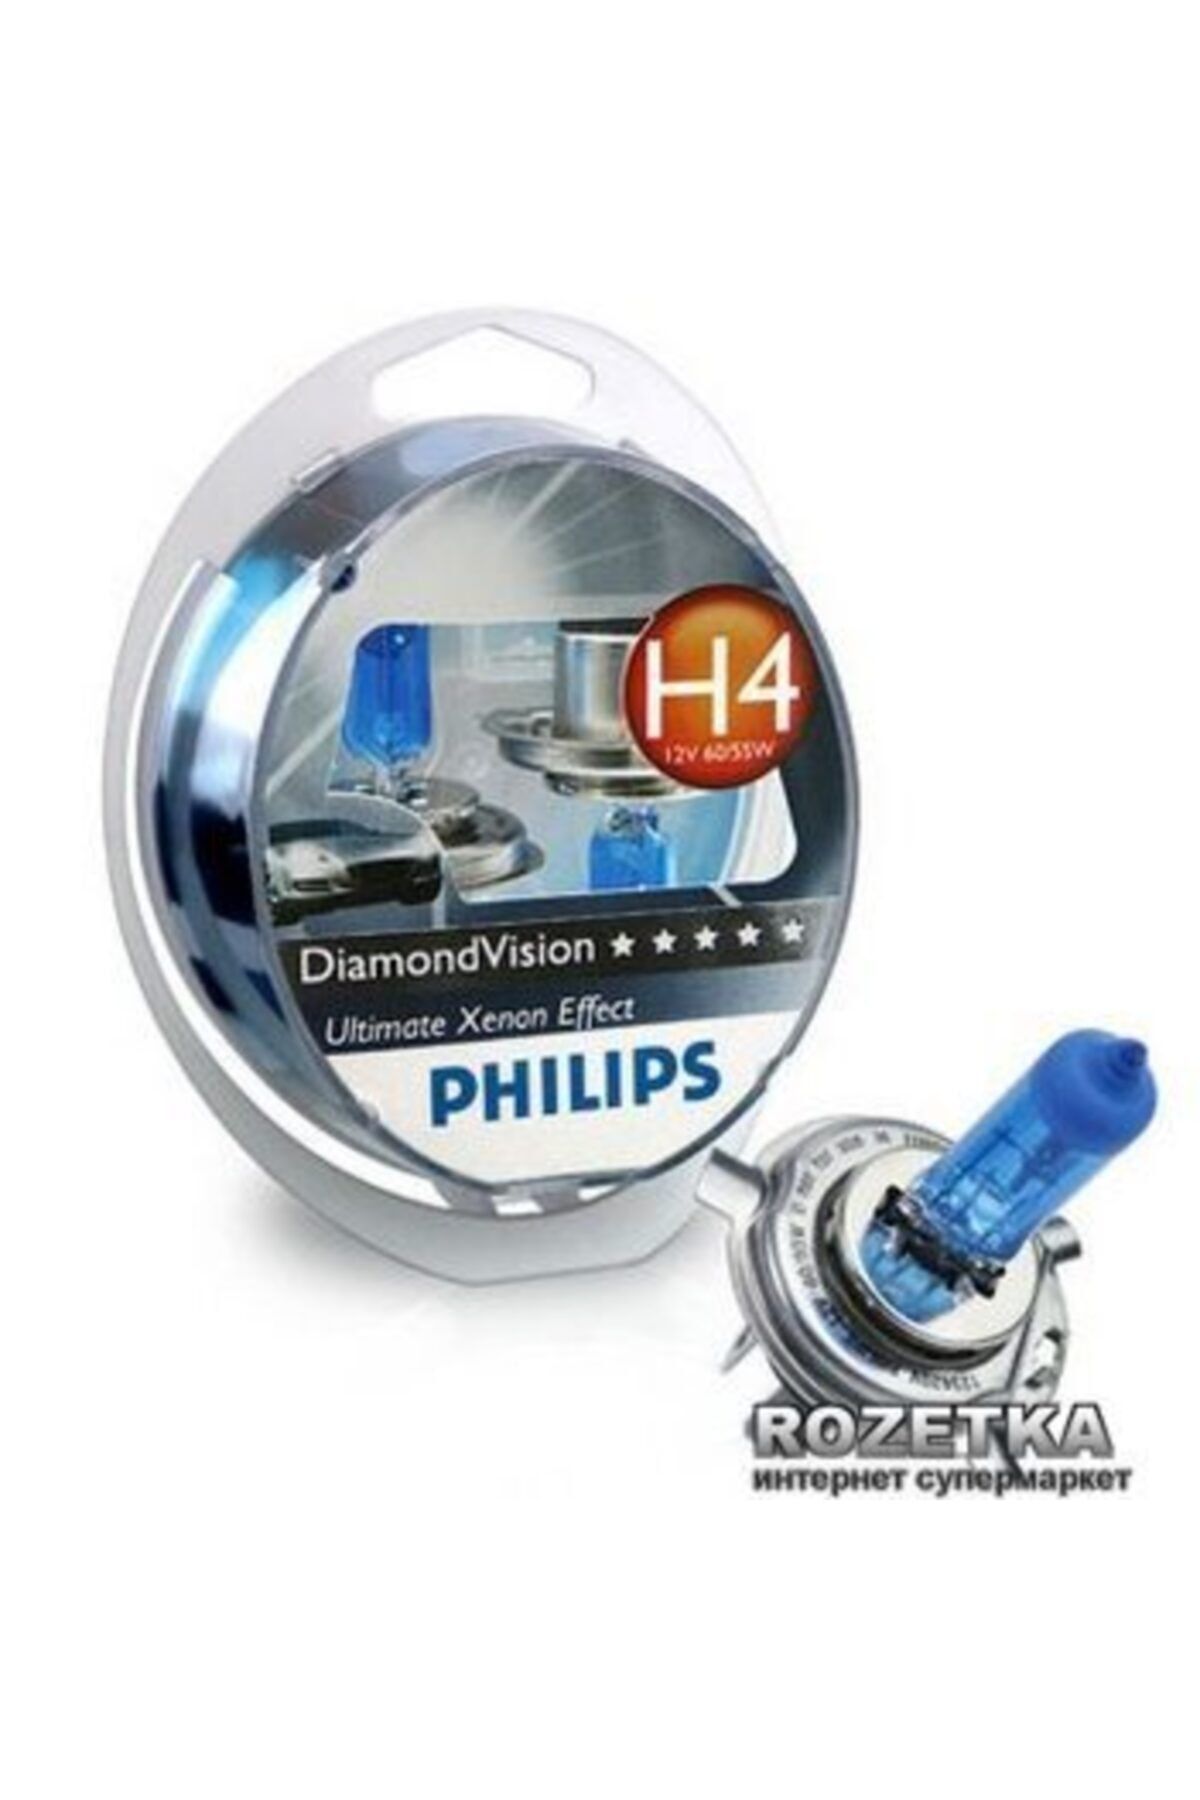 Philips h4 купить. Лампы Philips h4 55\60w-12v Diamond Vision 5000k. Philips 12v h4 60/55w Diamond Vision. Philips DIAMONDVISION h4 12v 60/55w 2шт. Лампа автомобильная Philips h4 12v 60/55w 5000k DIAMONDVISION 12342dv.